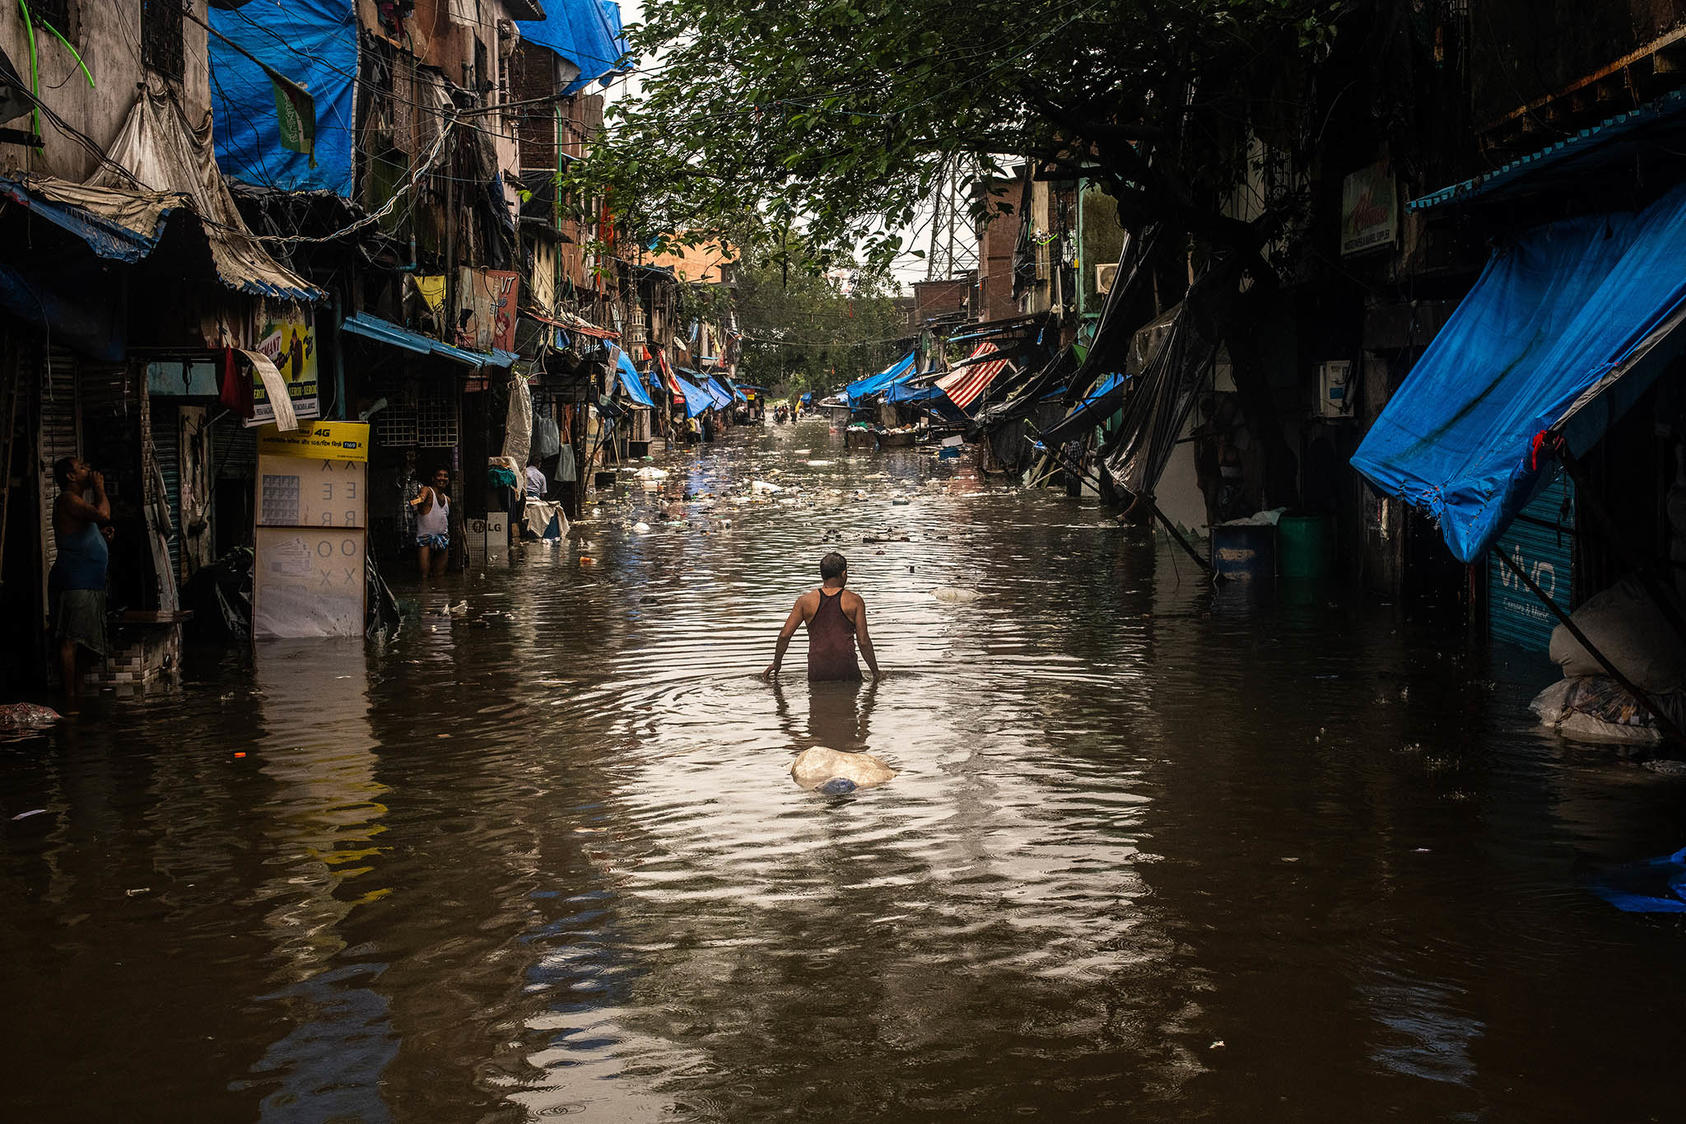 A man walks through a flooded street in the Scion neighborhood, along the Mithi River, of Mumbai, India, Aug. 4, 2019. (Bryan Denton/The New York Times)